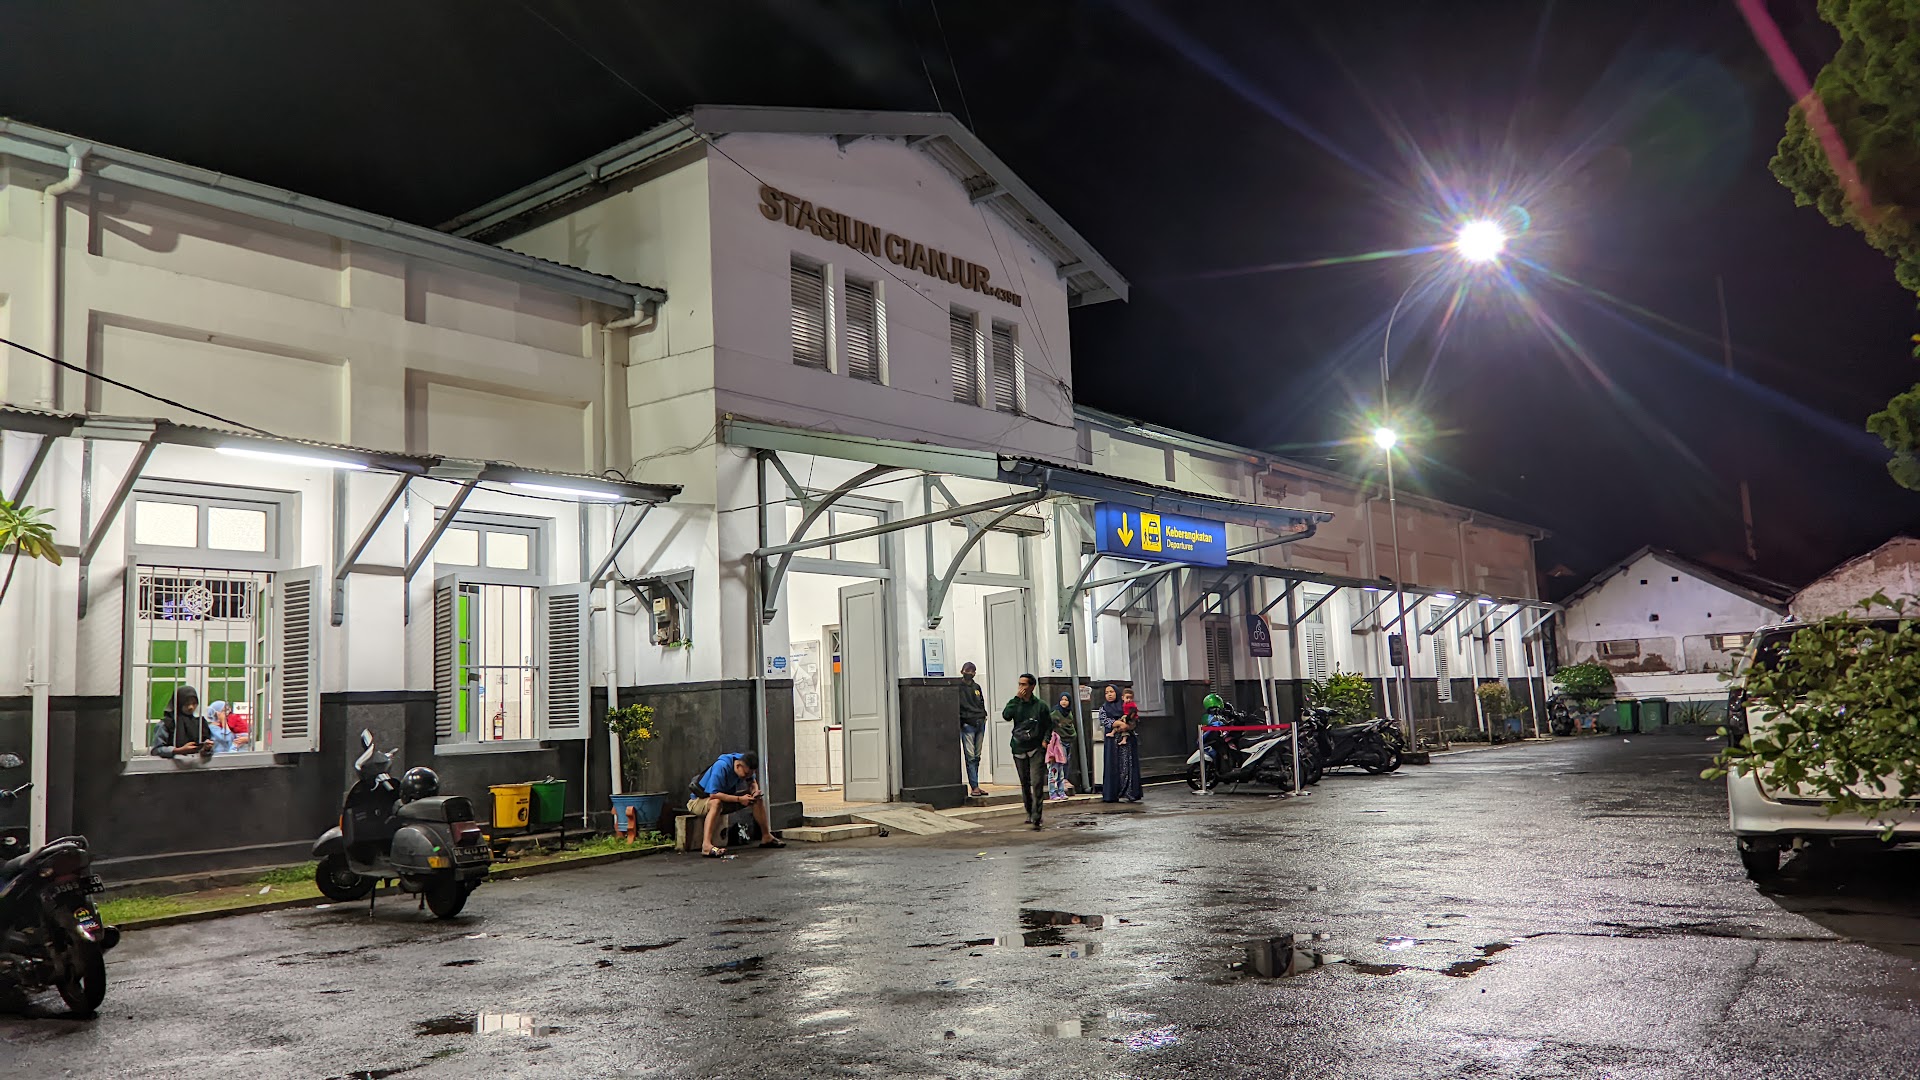 Stasiun Cianjur Photo